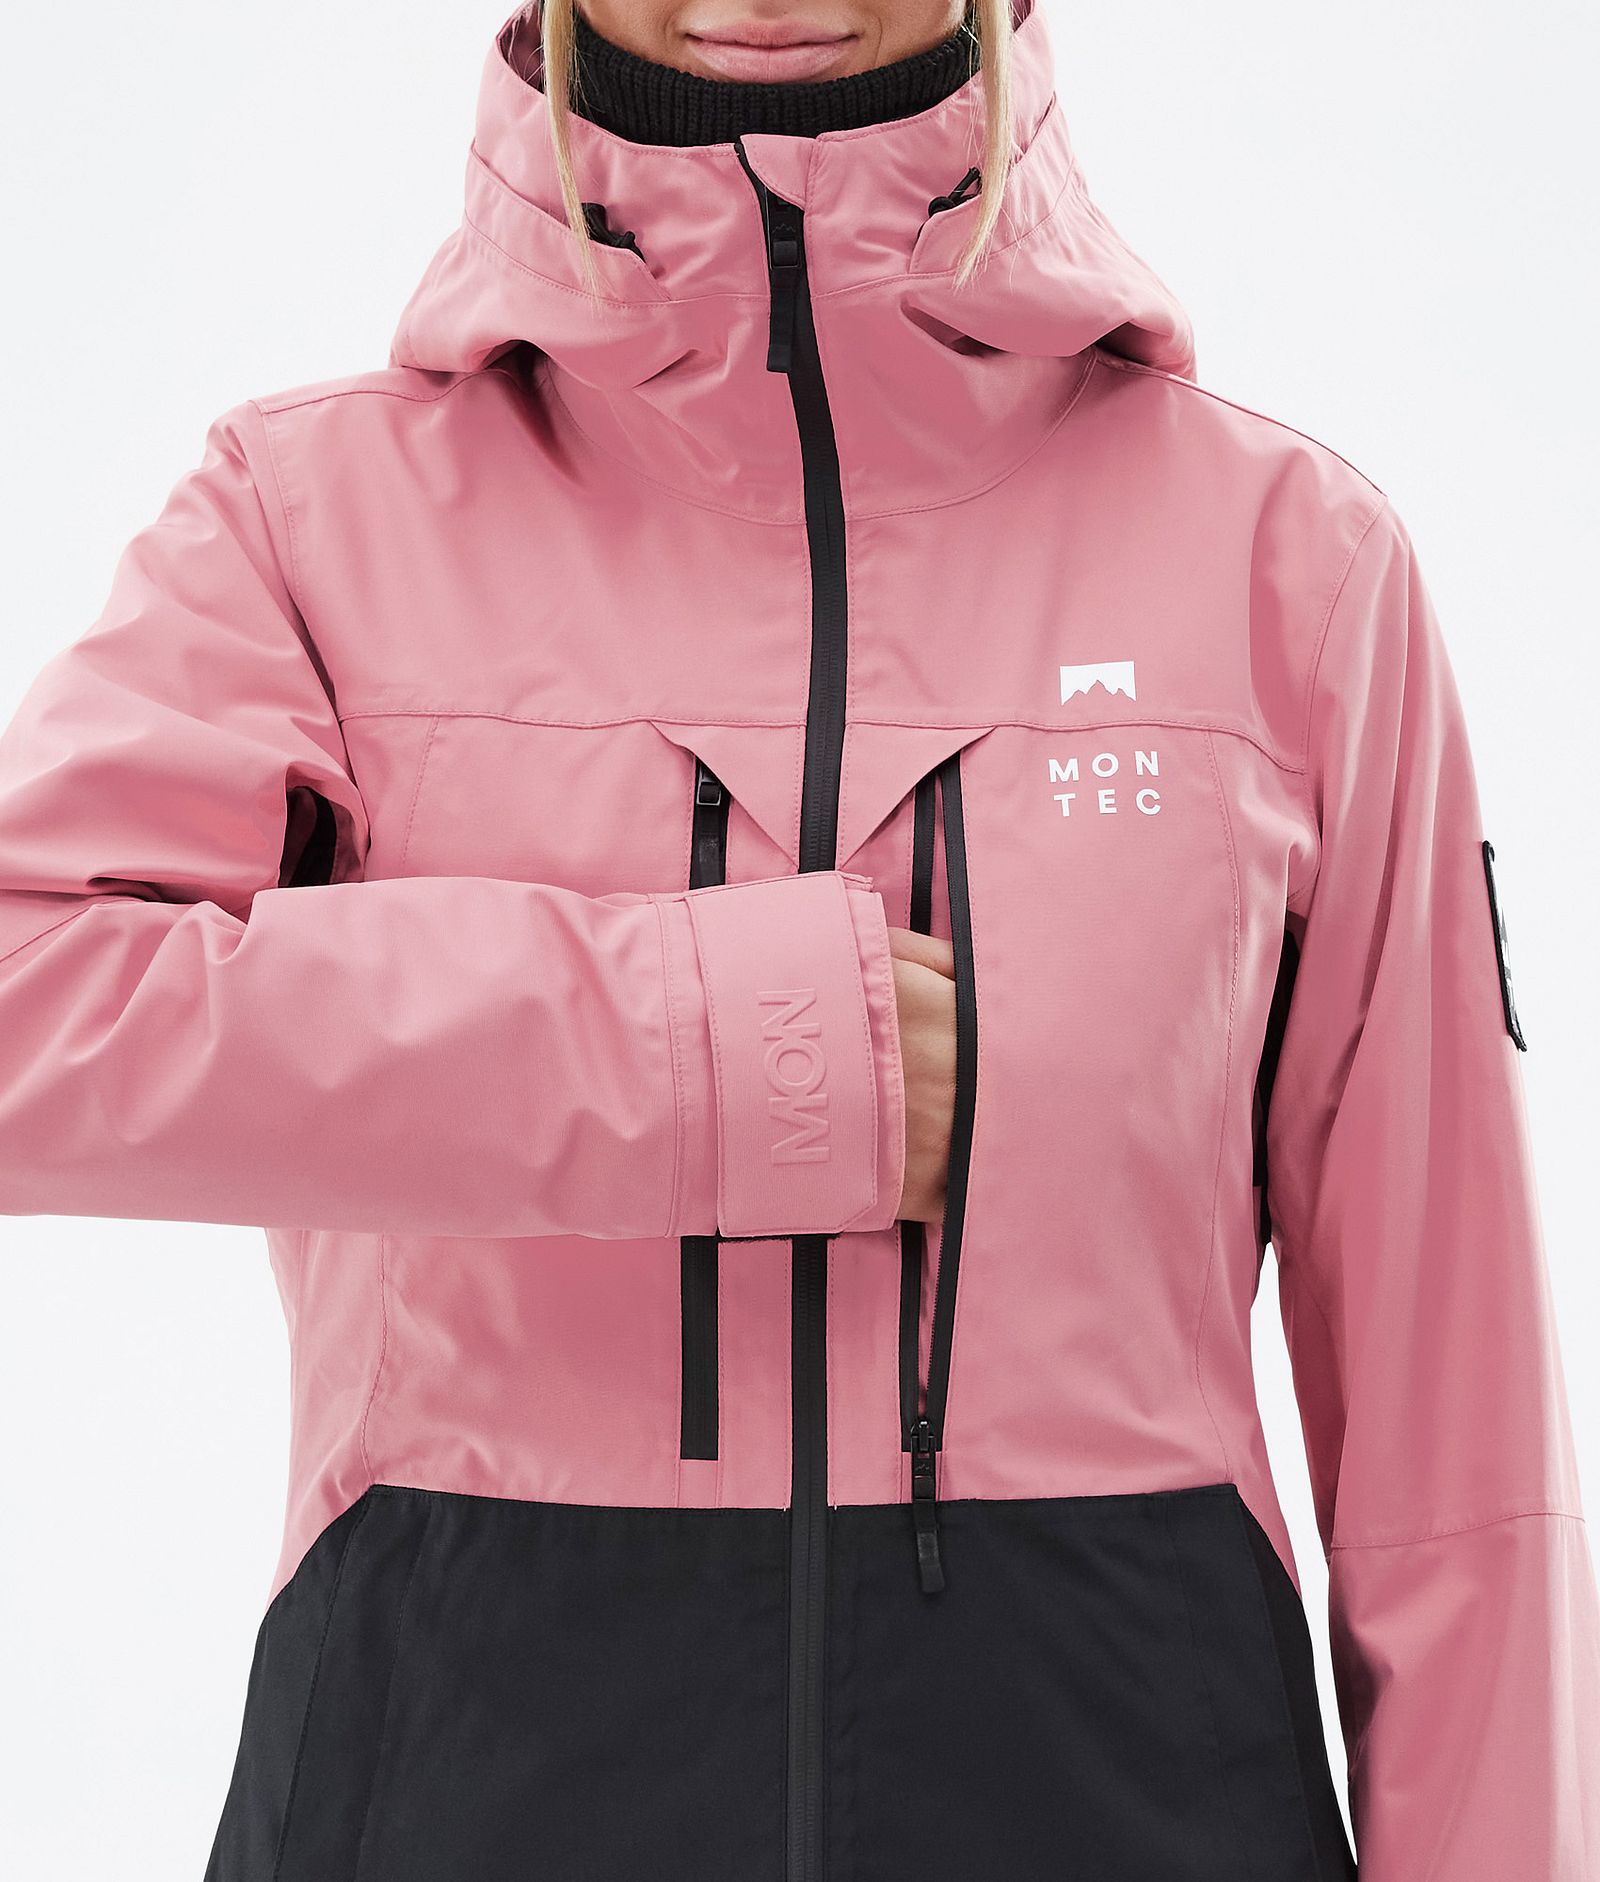 Moss W Skijacke Damen Pink/Black